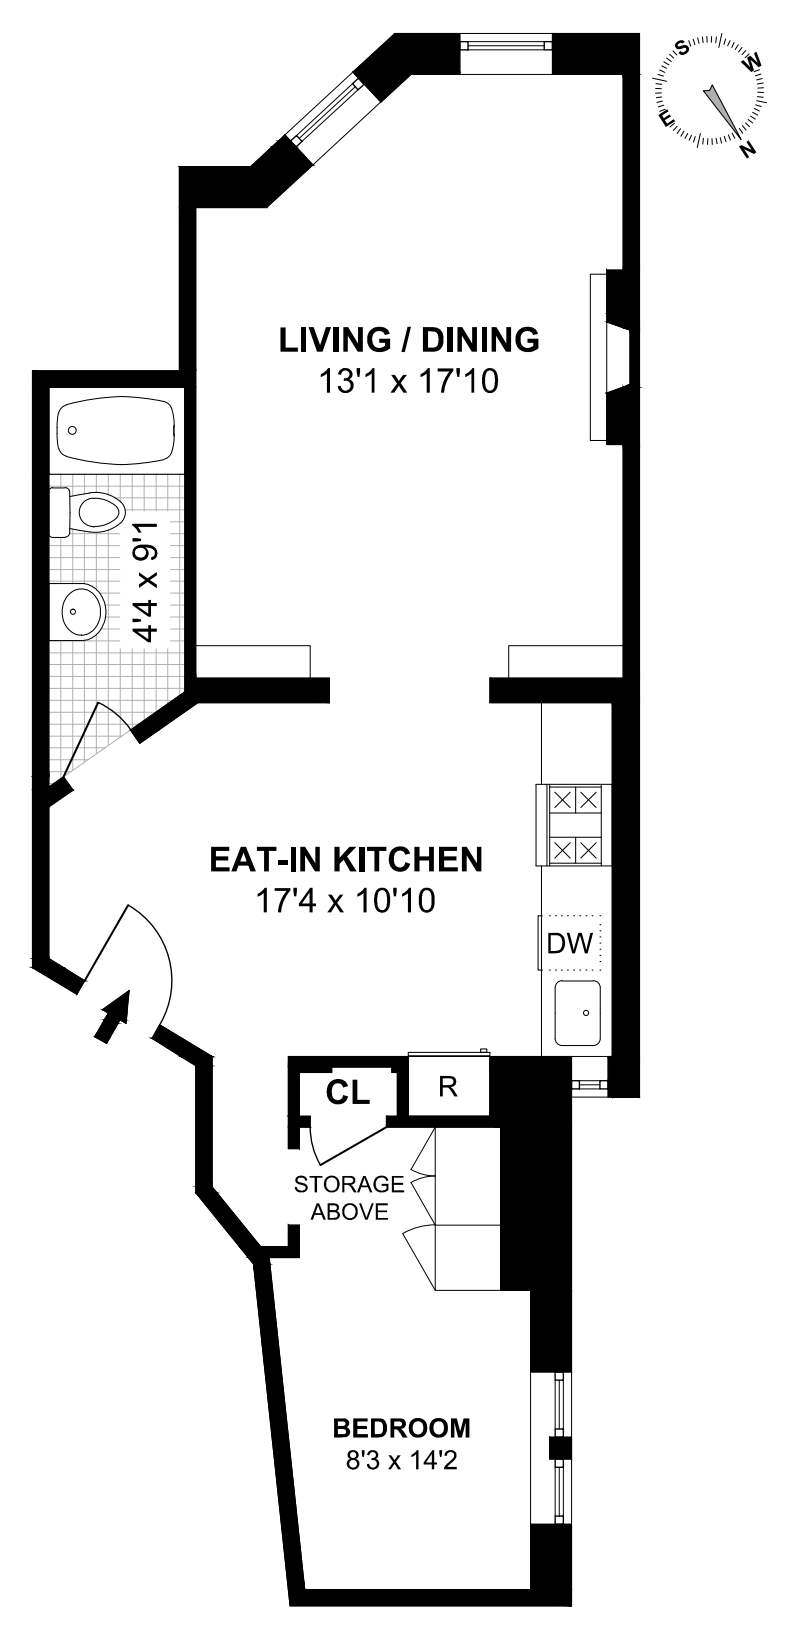 Floorplan for 1 Bedroom Gem  - Prime Cobble Hill